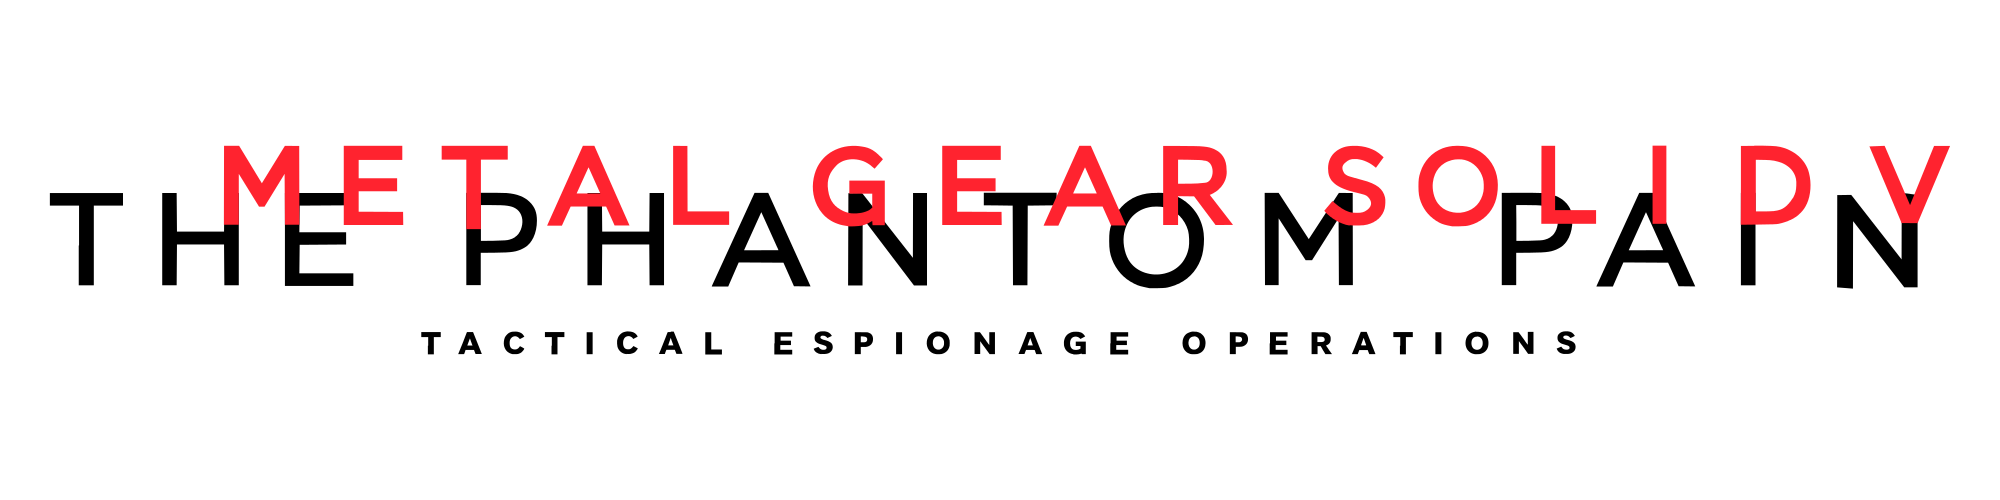 Metal Gear svg #15, Download drawings